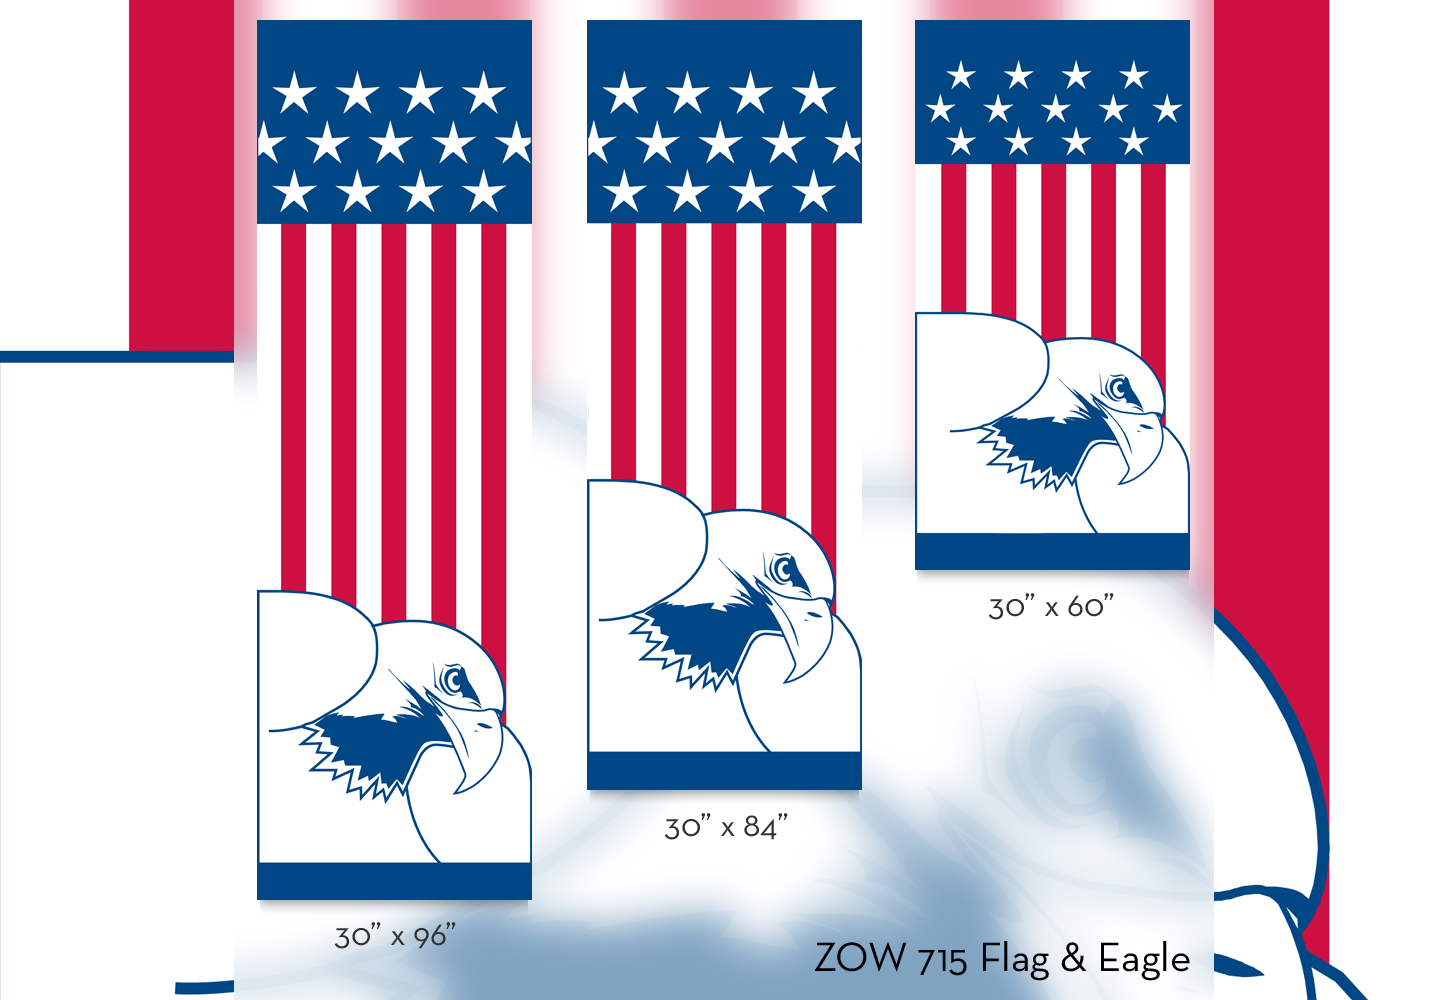 ZOW 715 Flag & Eagle